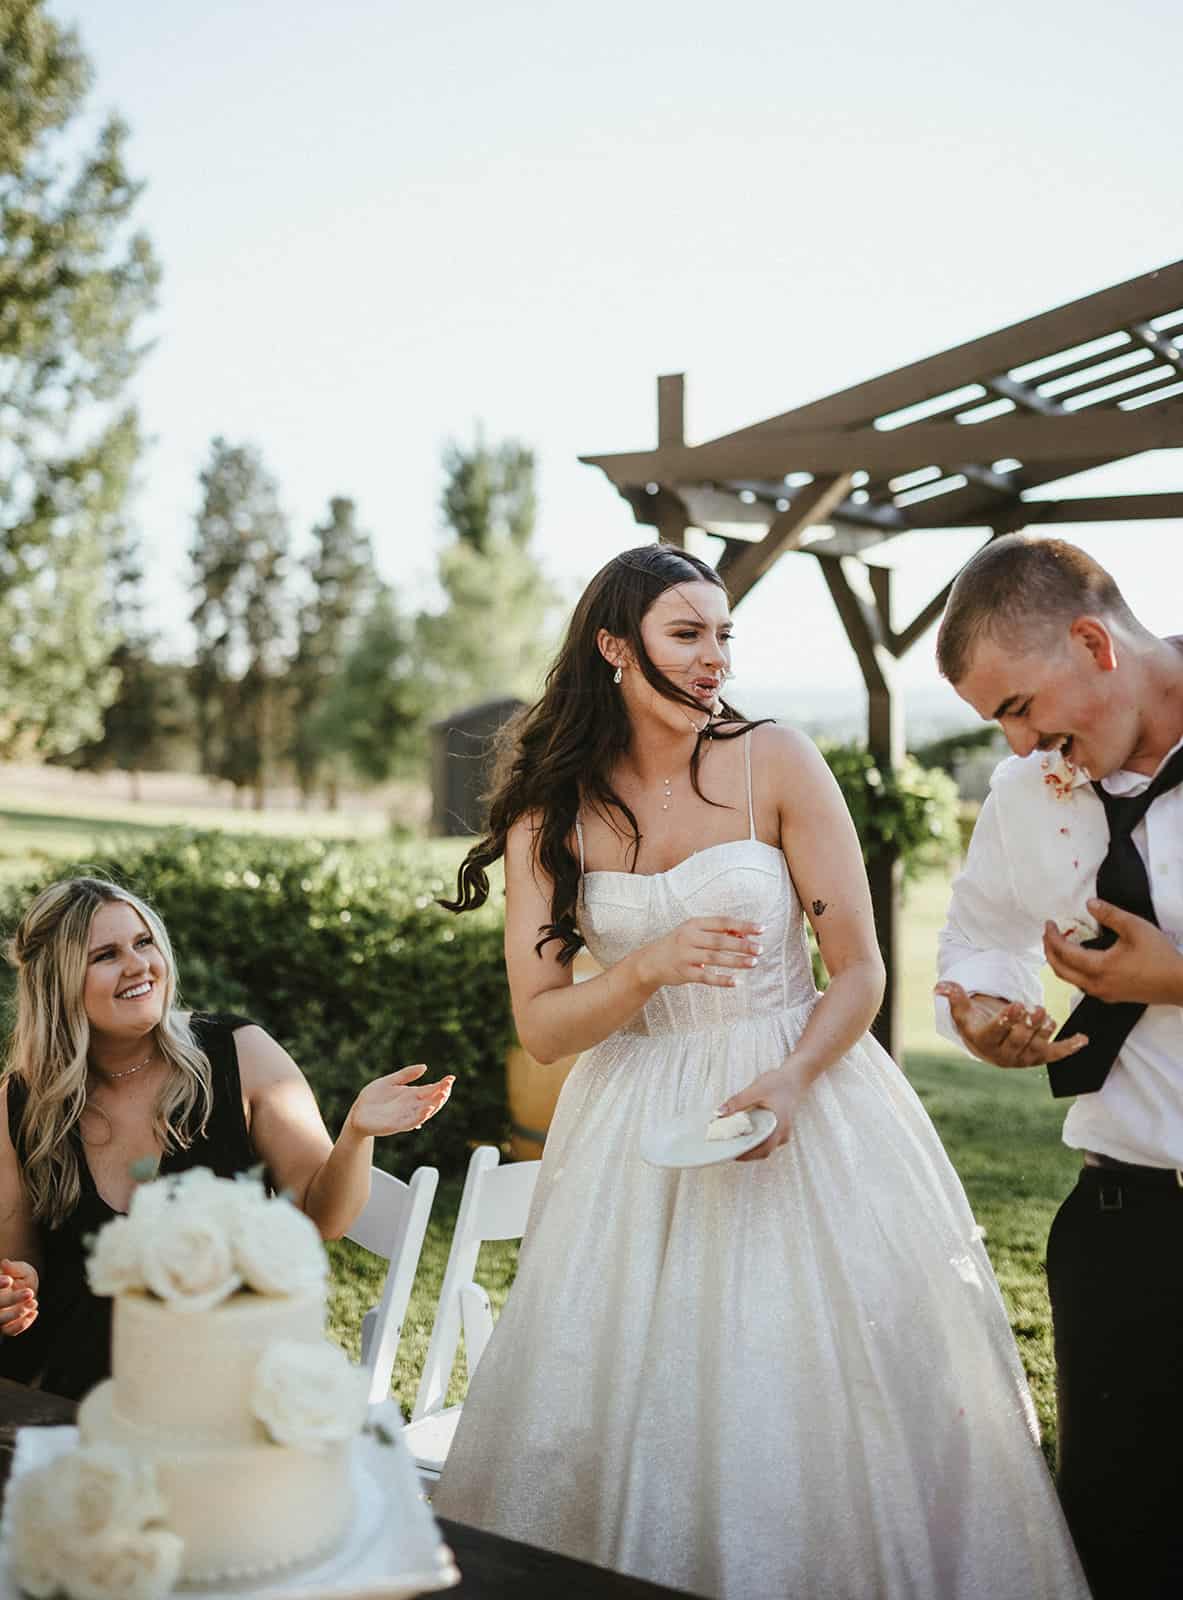 Hannah, a photographer, hanging up a wedding dress